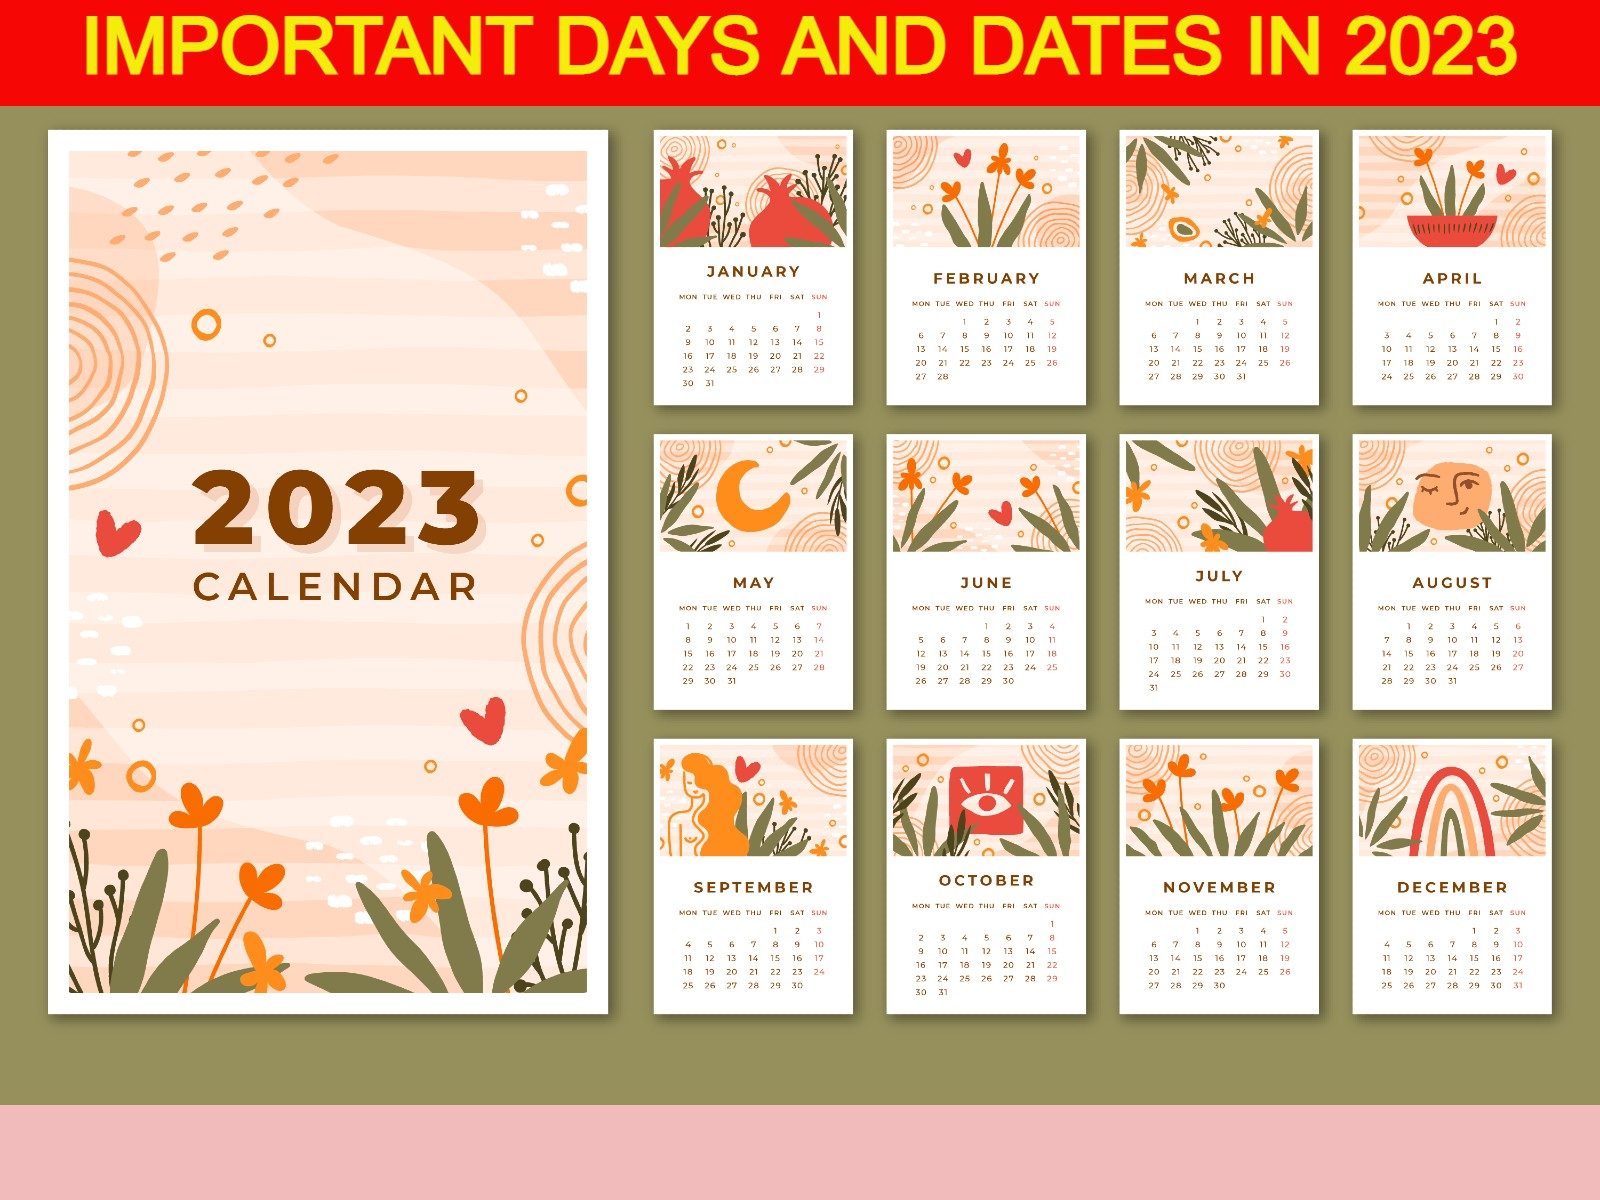 Imp Days And Dates 2023 16723888684x3 